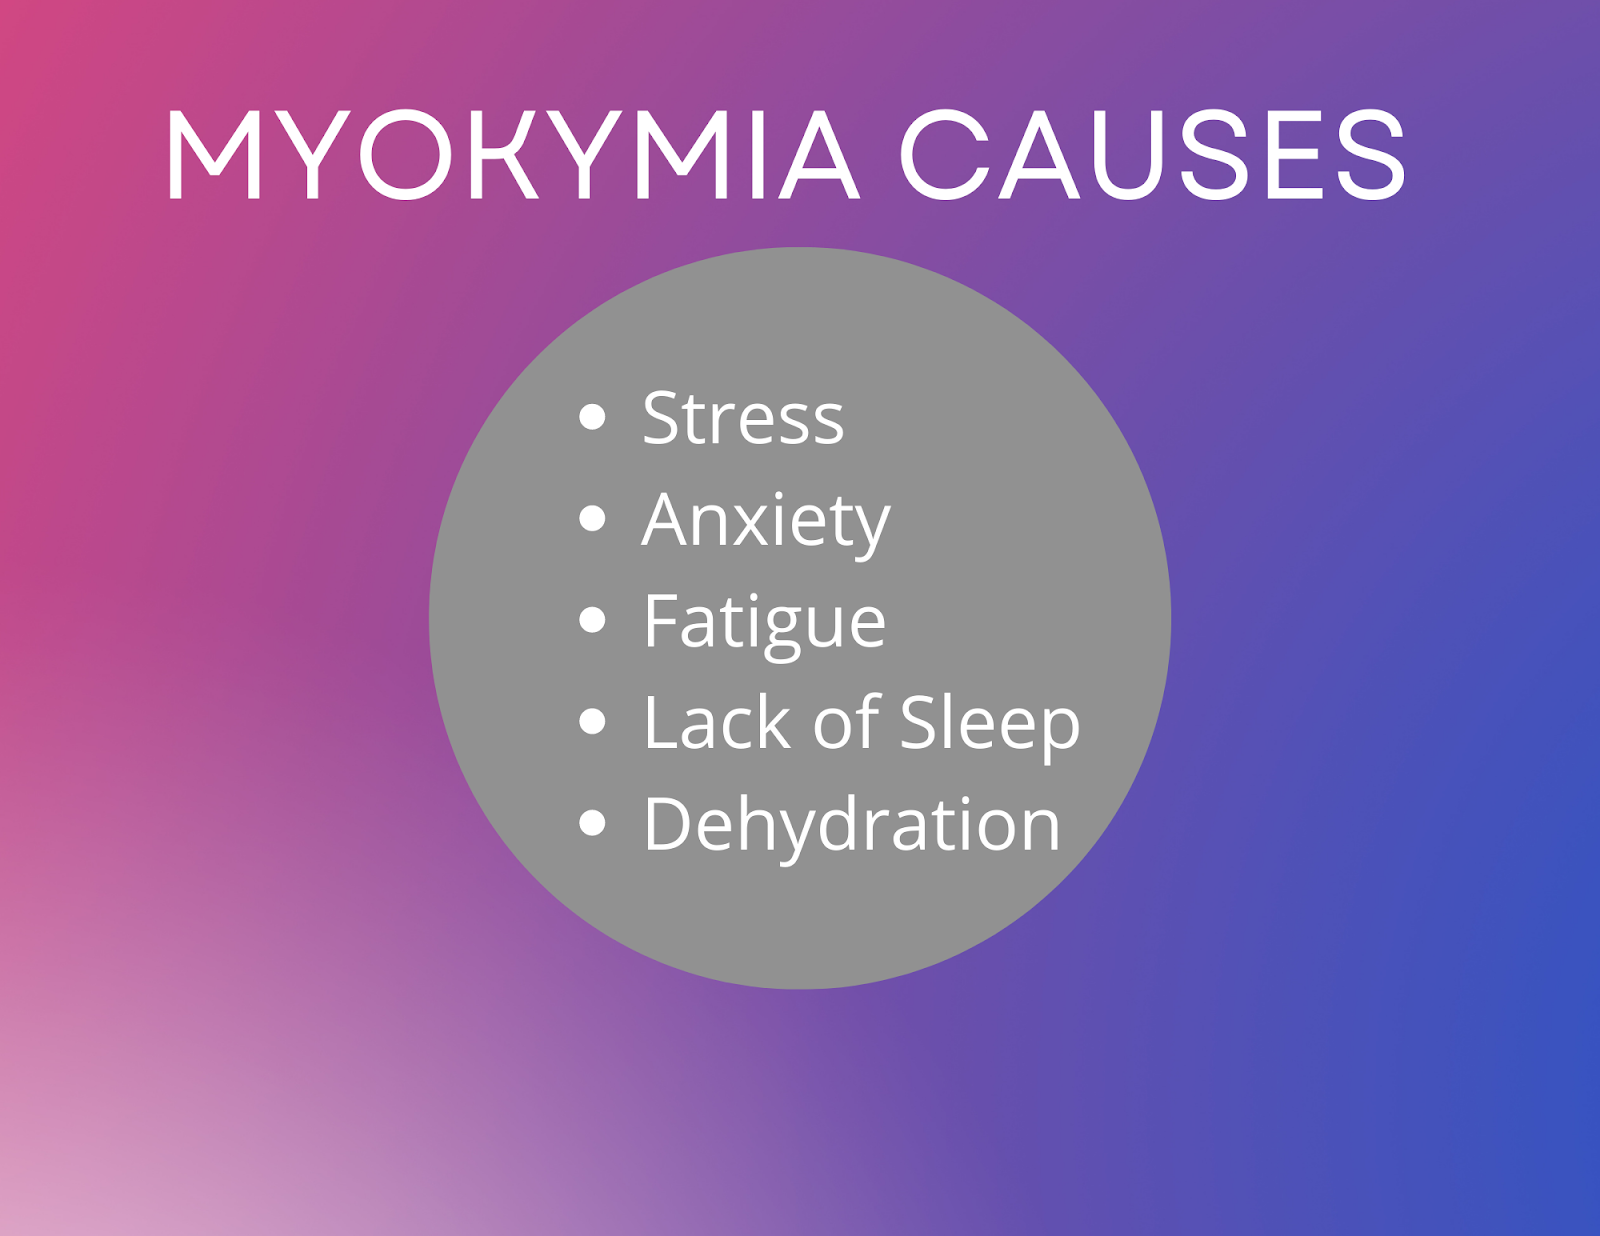 Causes, Symptoms, and Treatment for Myokymia